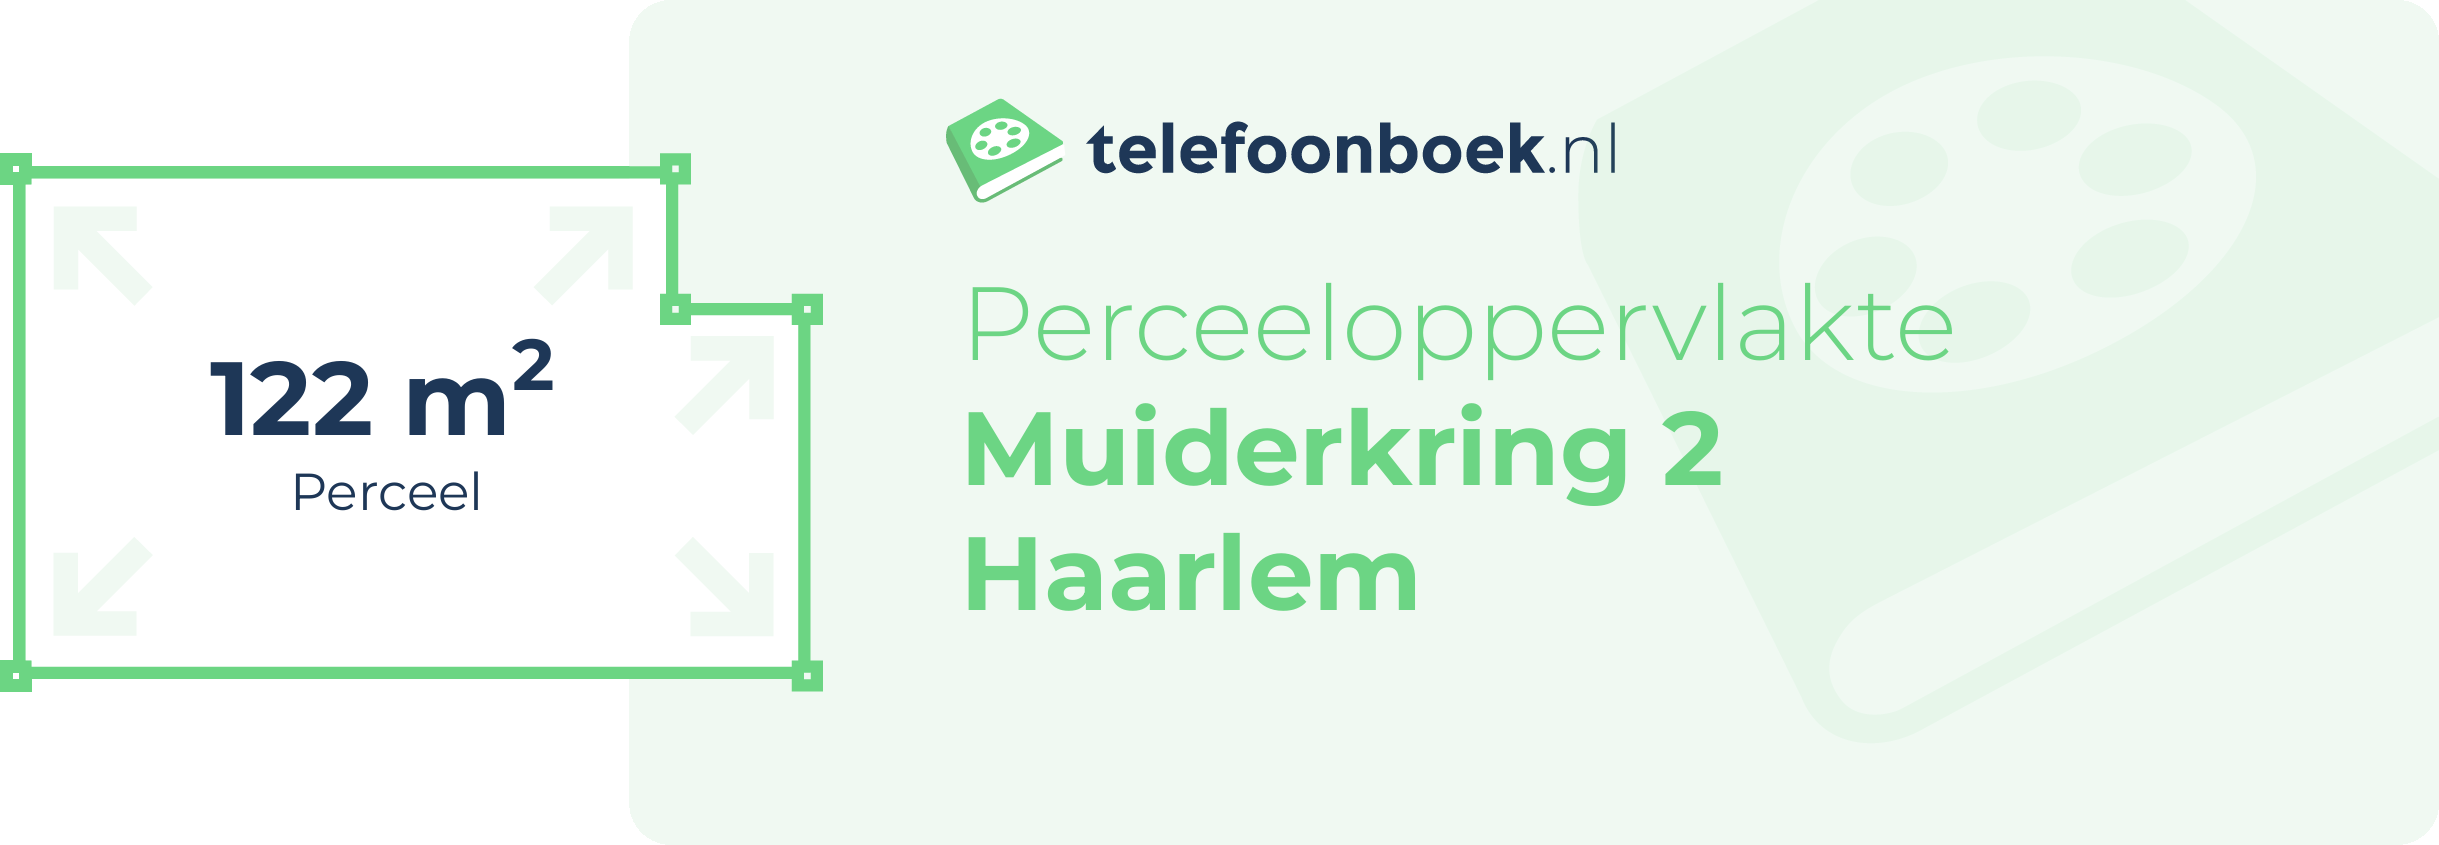 Perceeloppervlakte Muiderkring 2 Haarlem